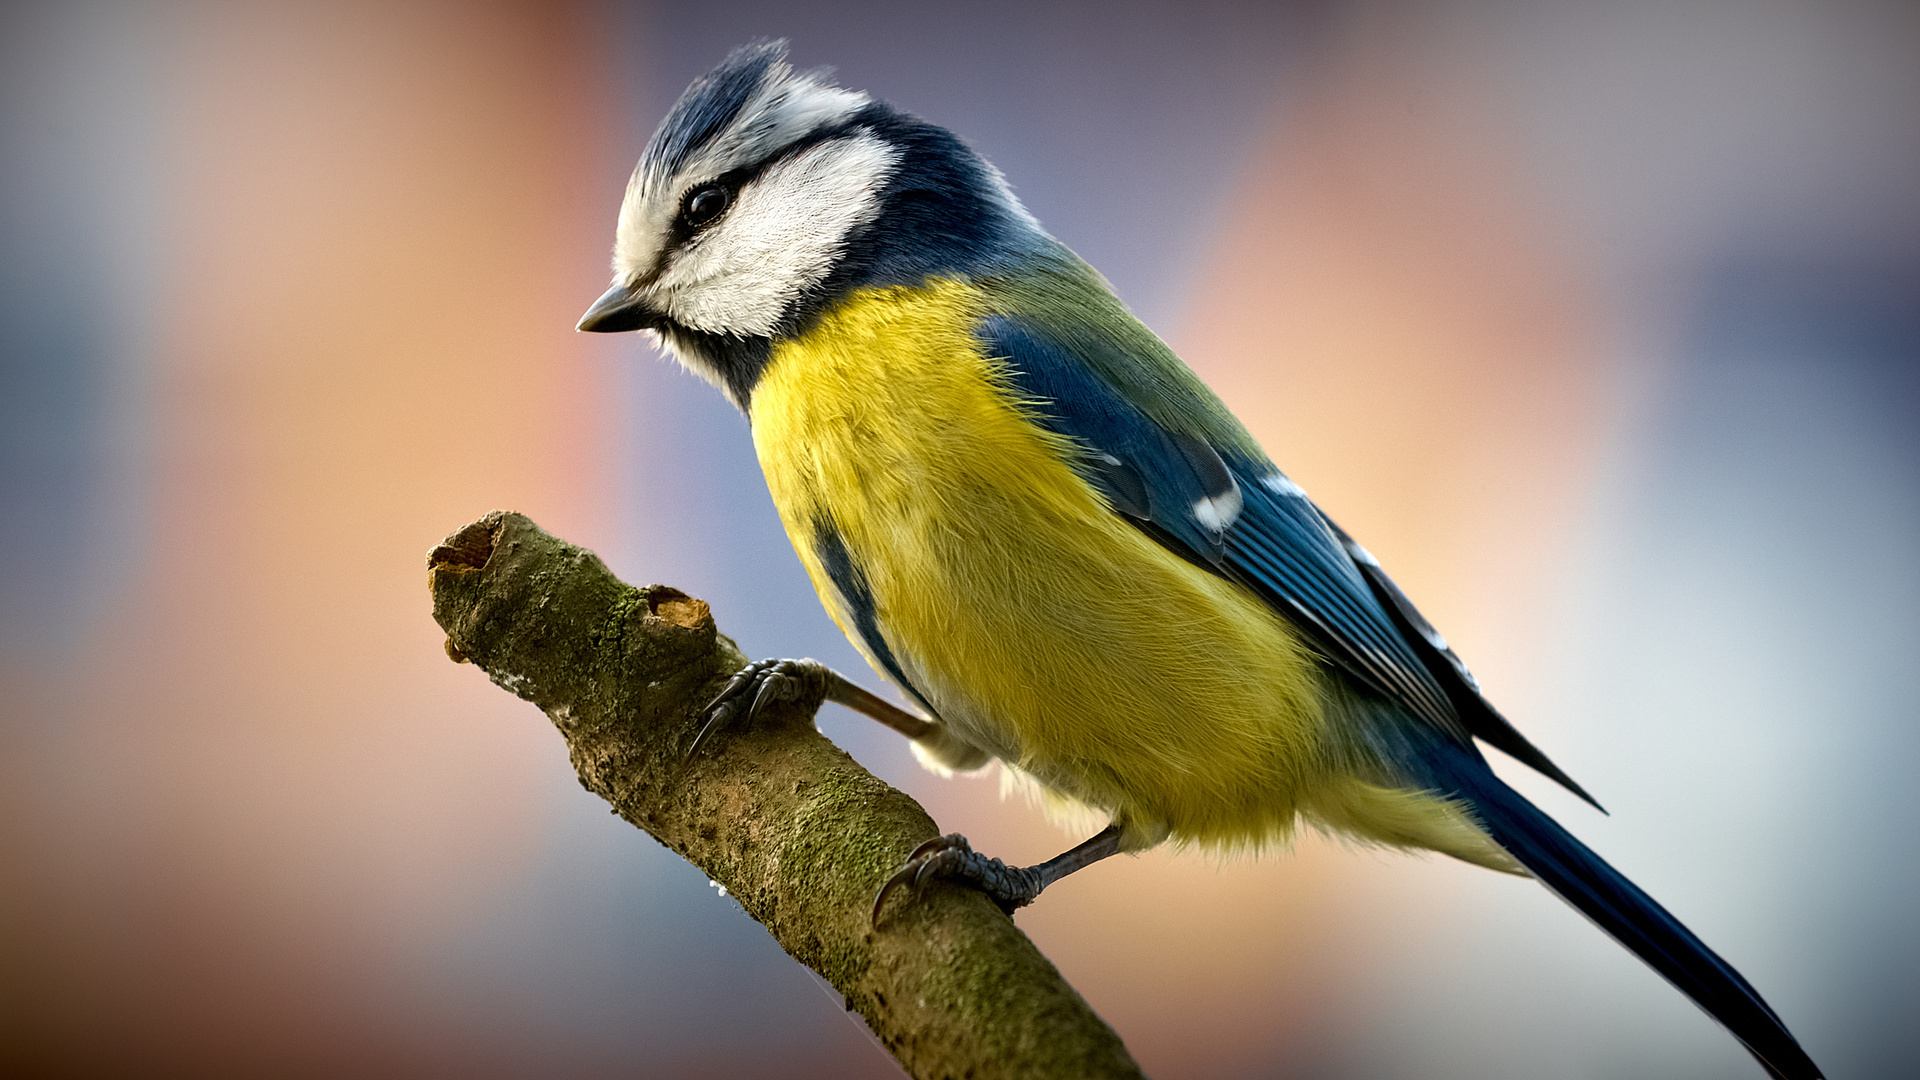 Popular Birds background images